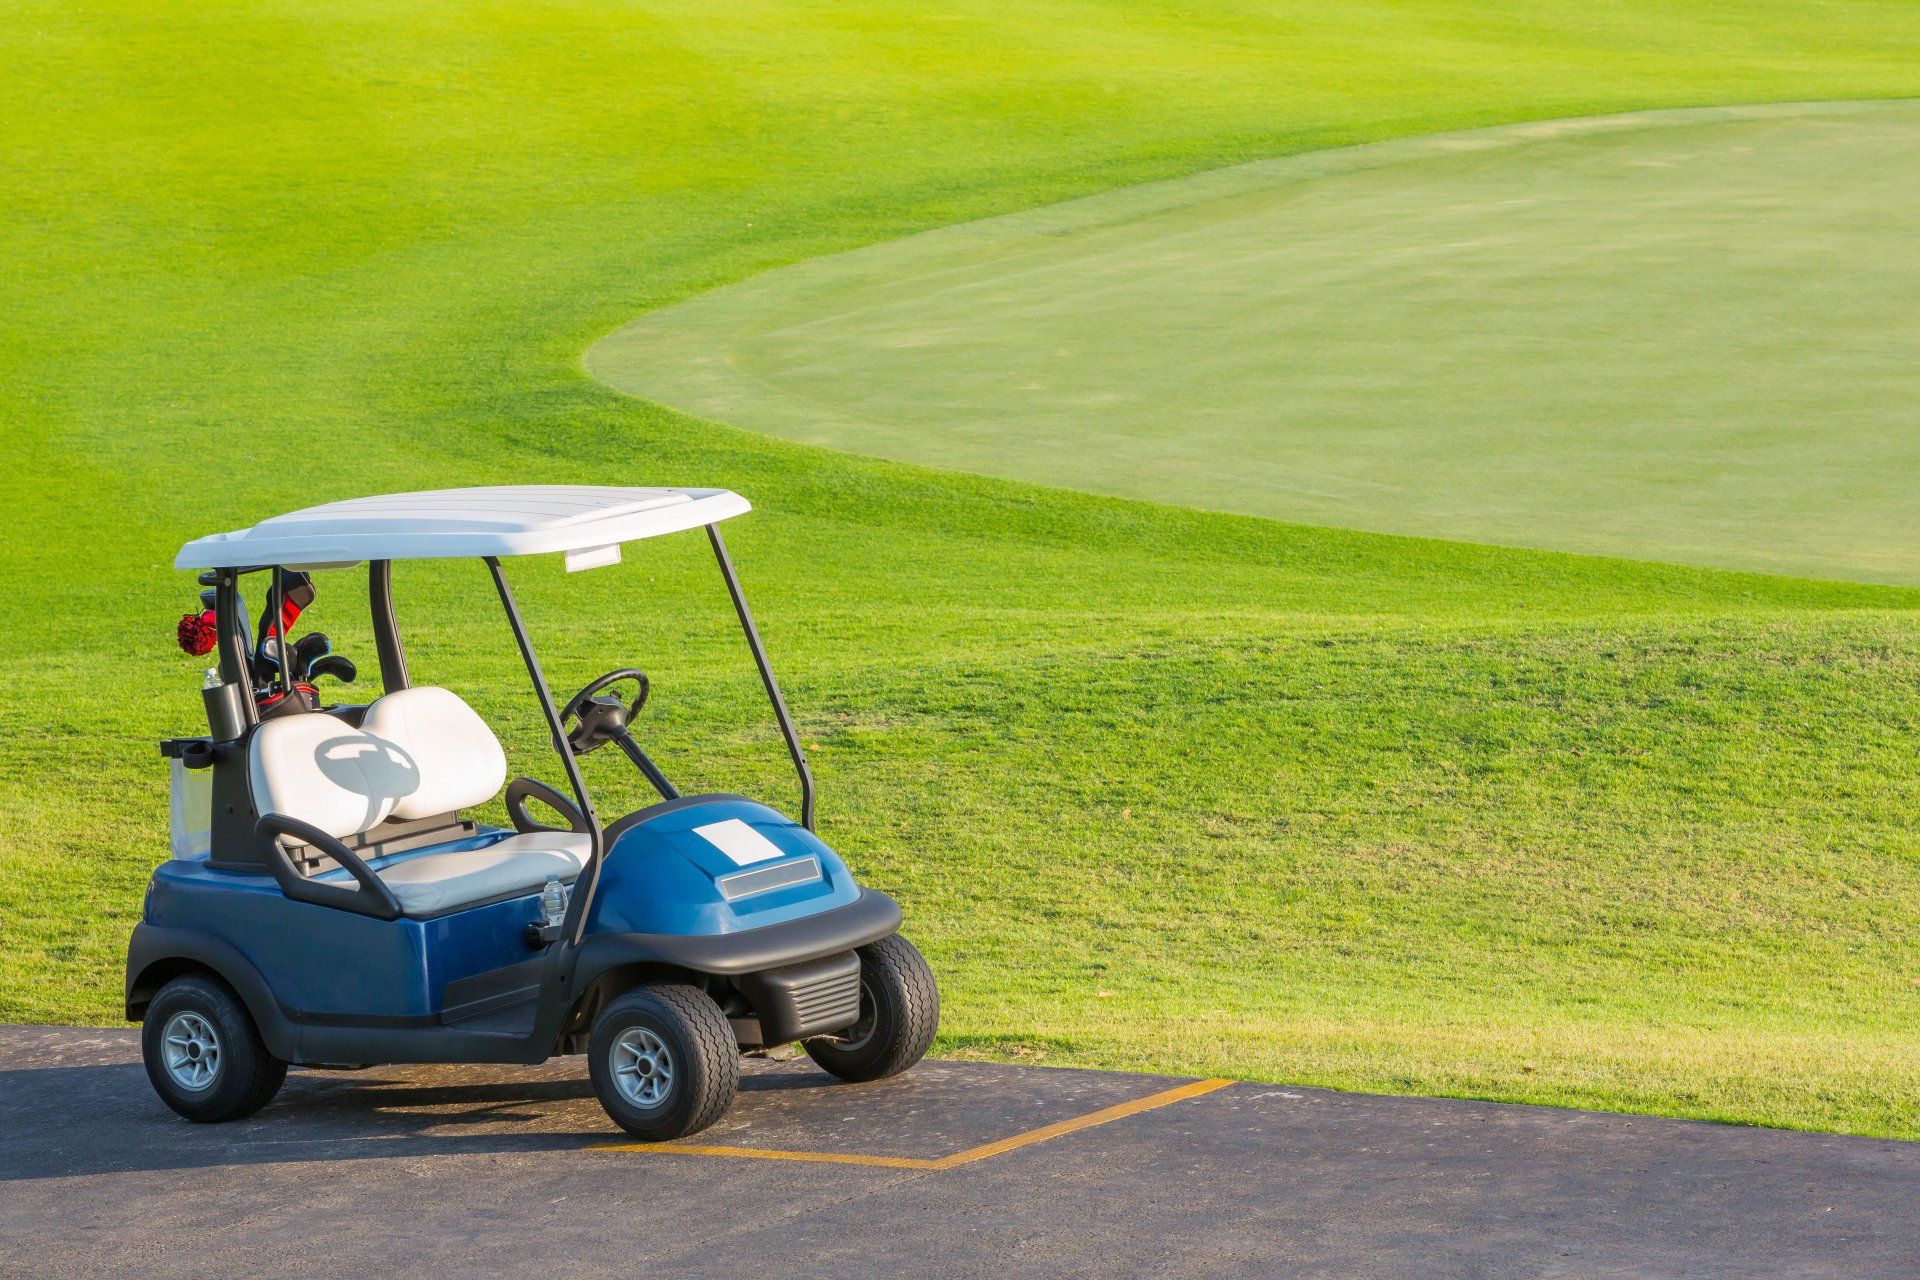 custom golf cart seats